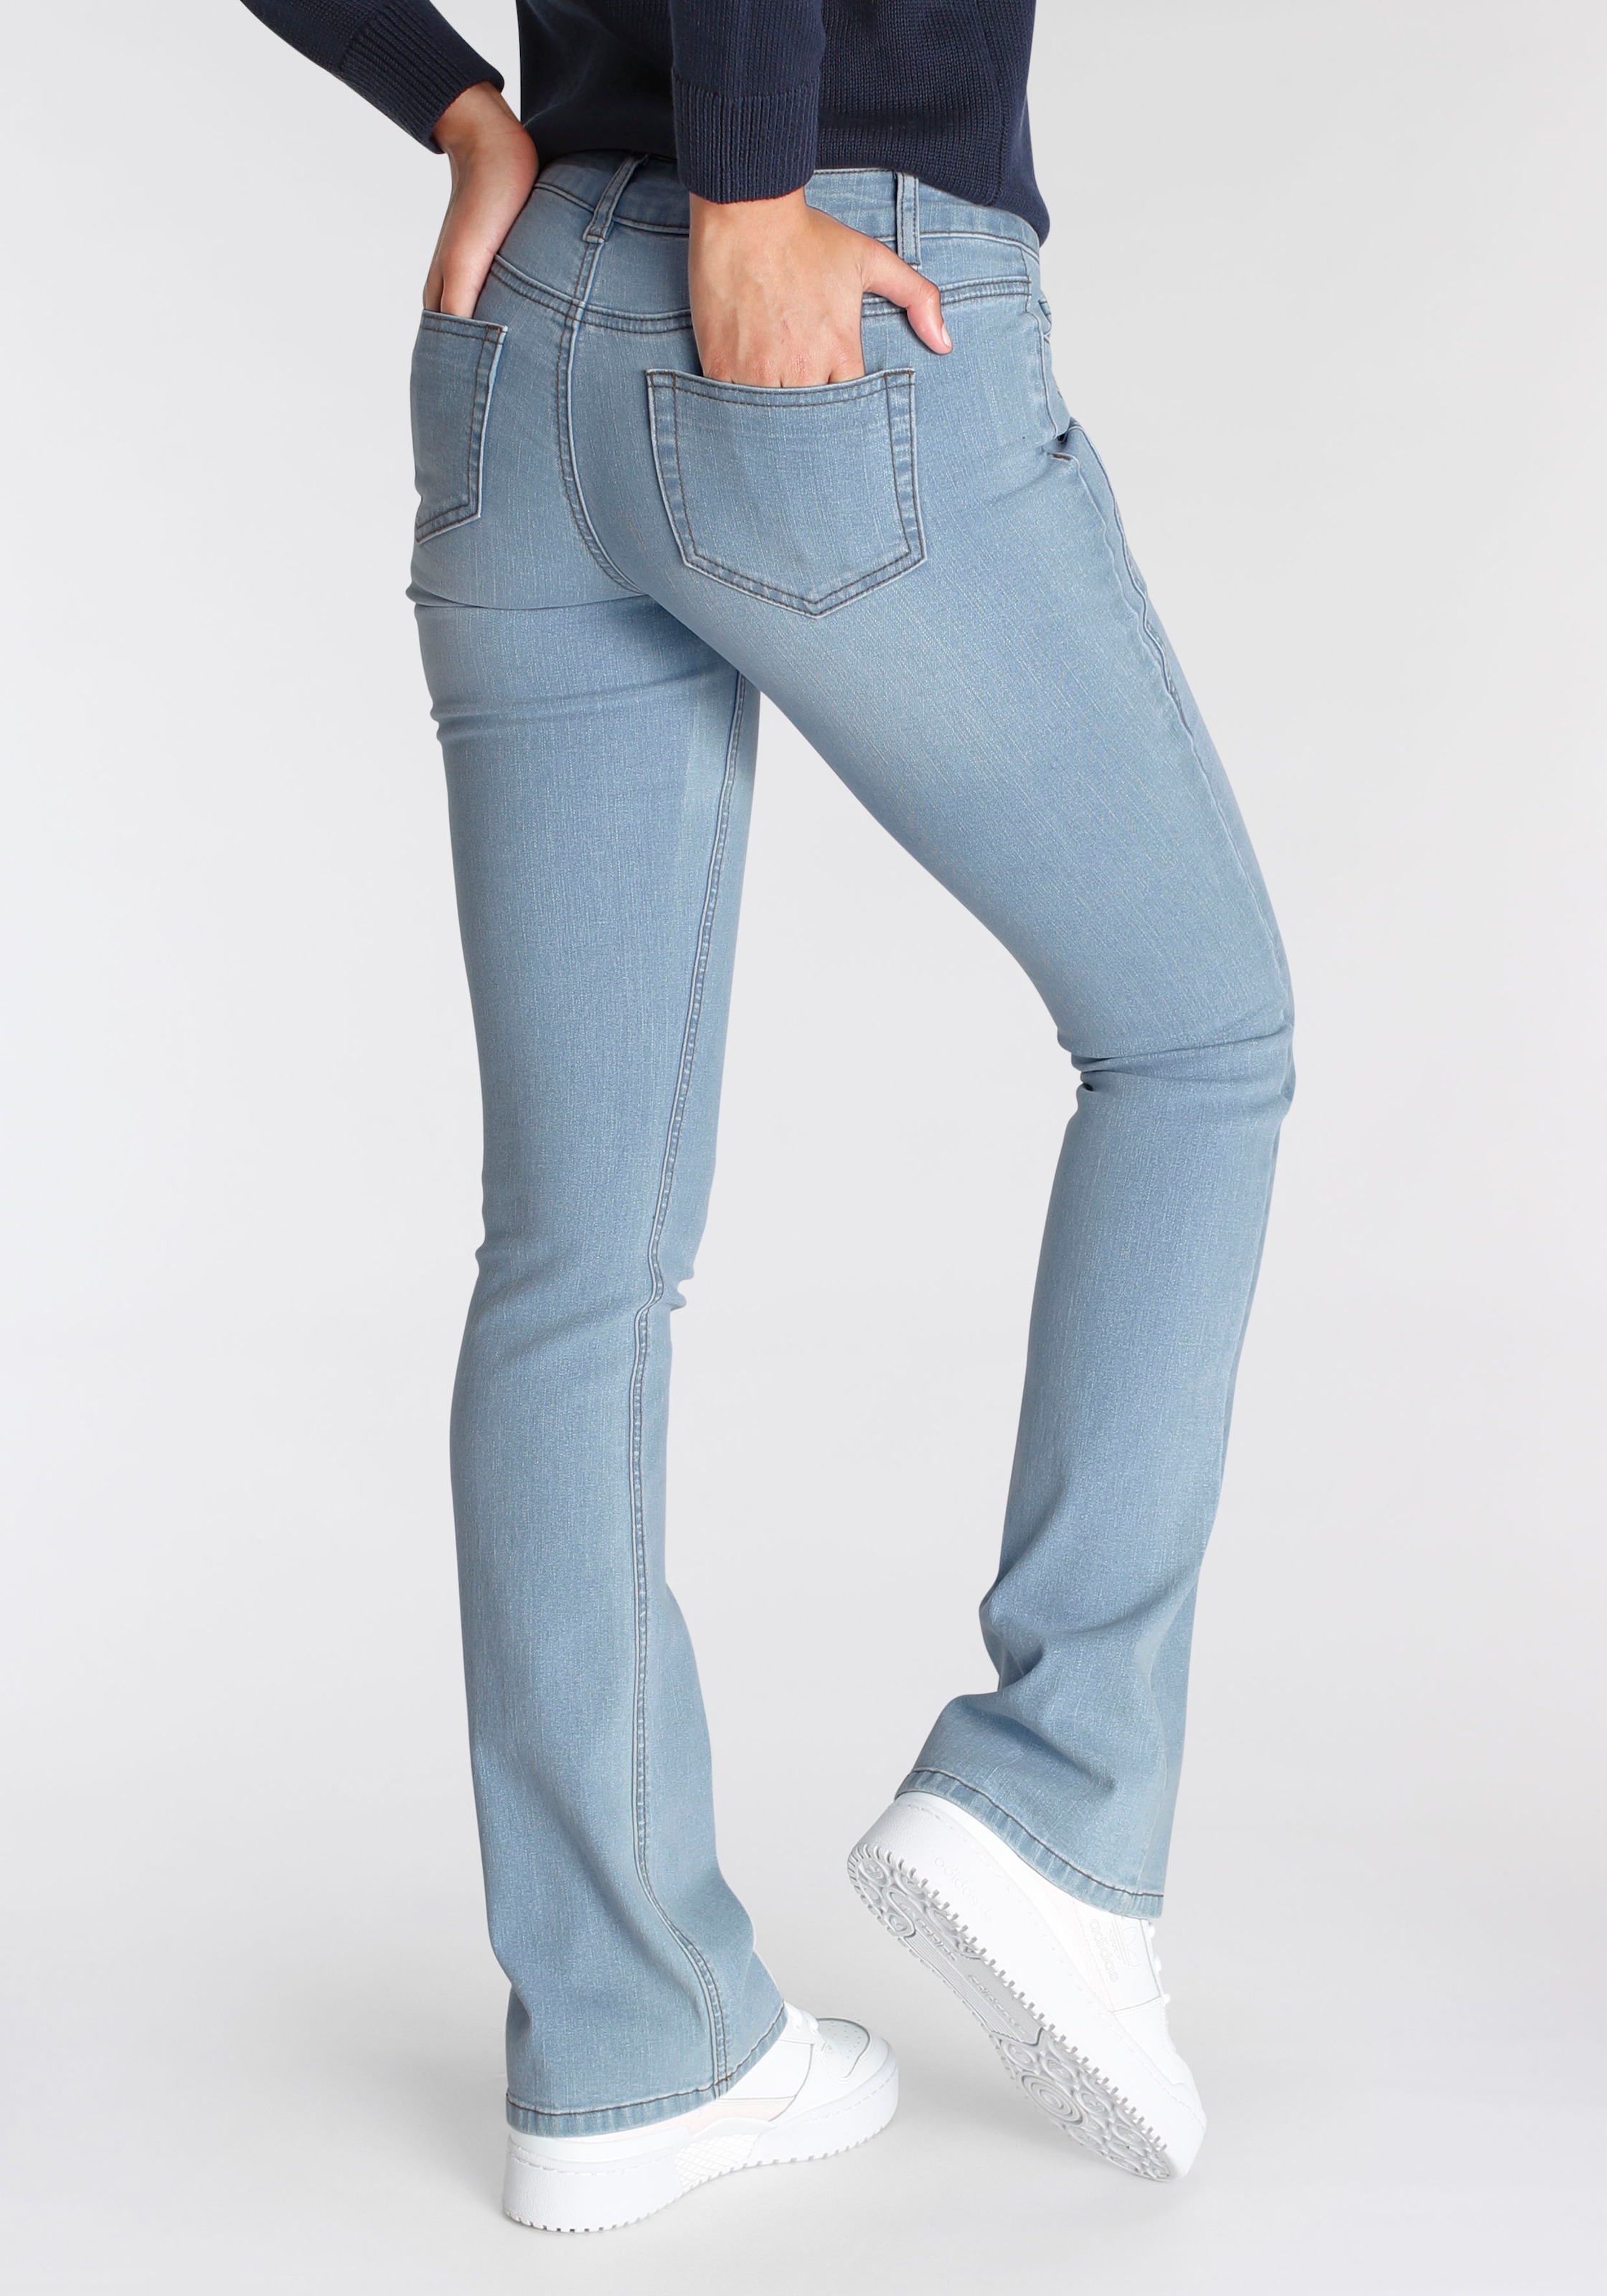 Arizona Bootcut-Jeans Keileinsätzen«, bei Low Waist »mit OTTOversand